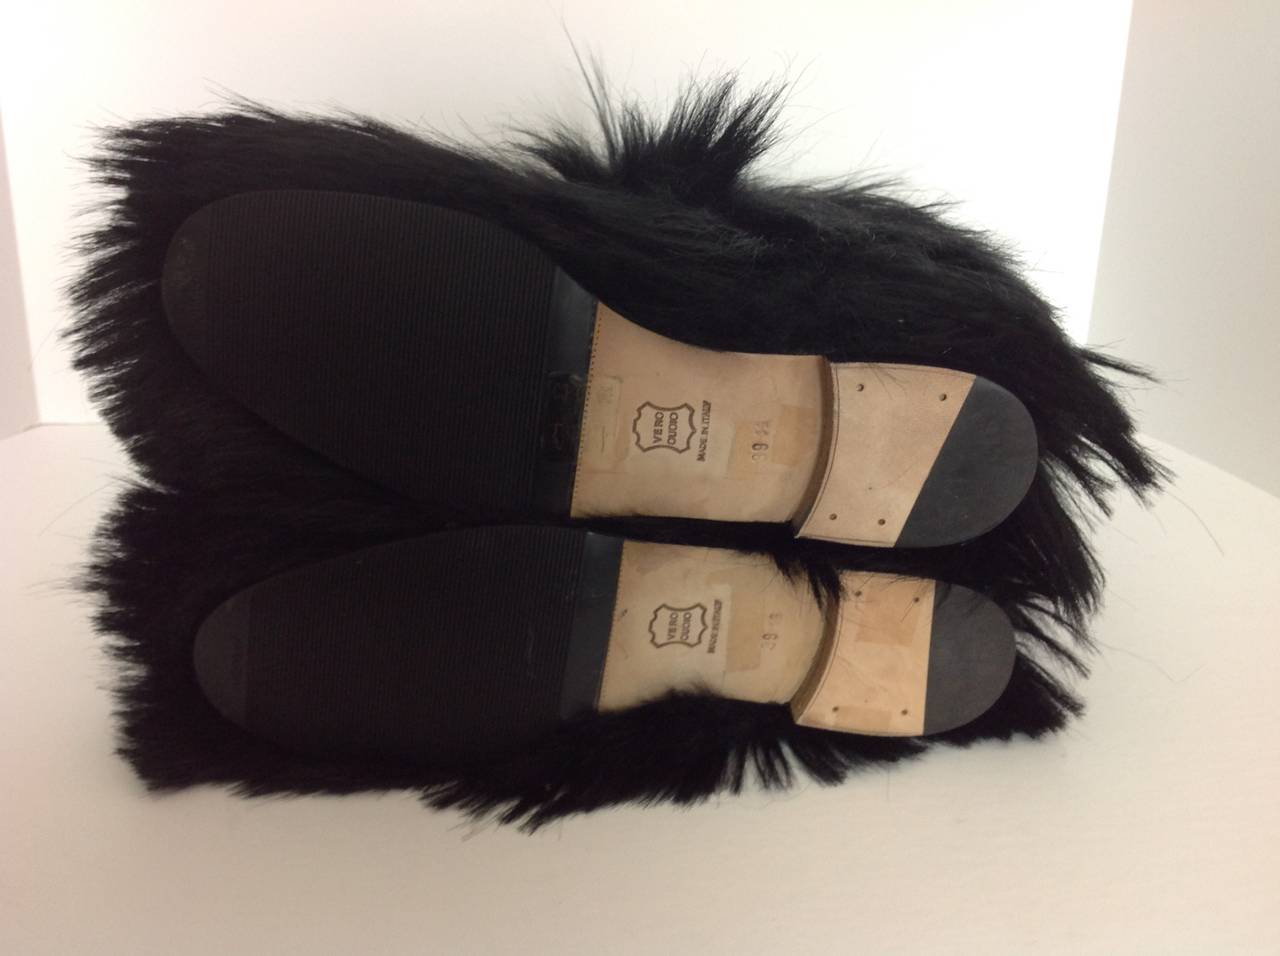 Women's MANOLO BLAHNIK jet black fur boot          Size 39 1/2